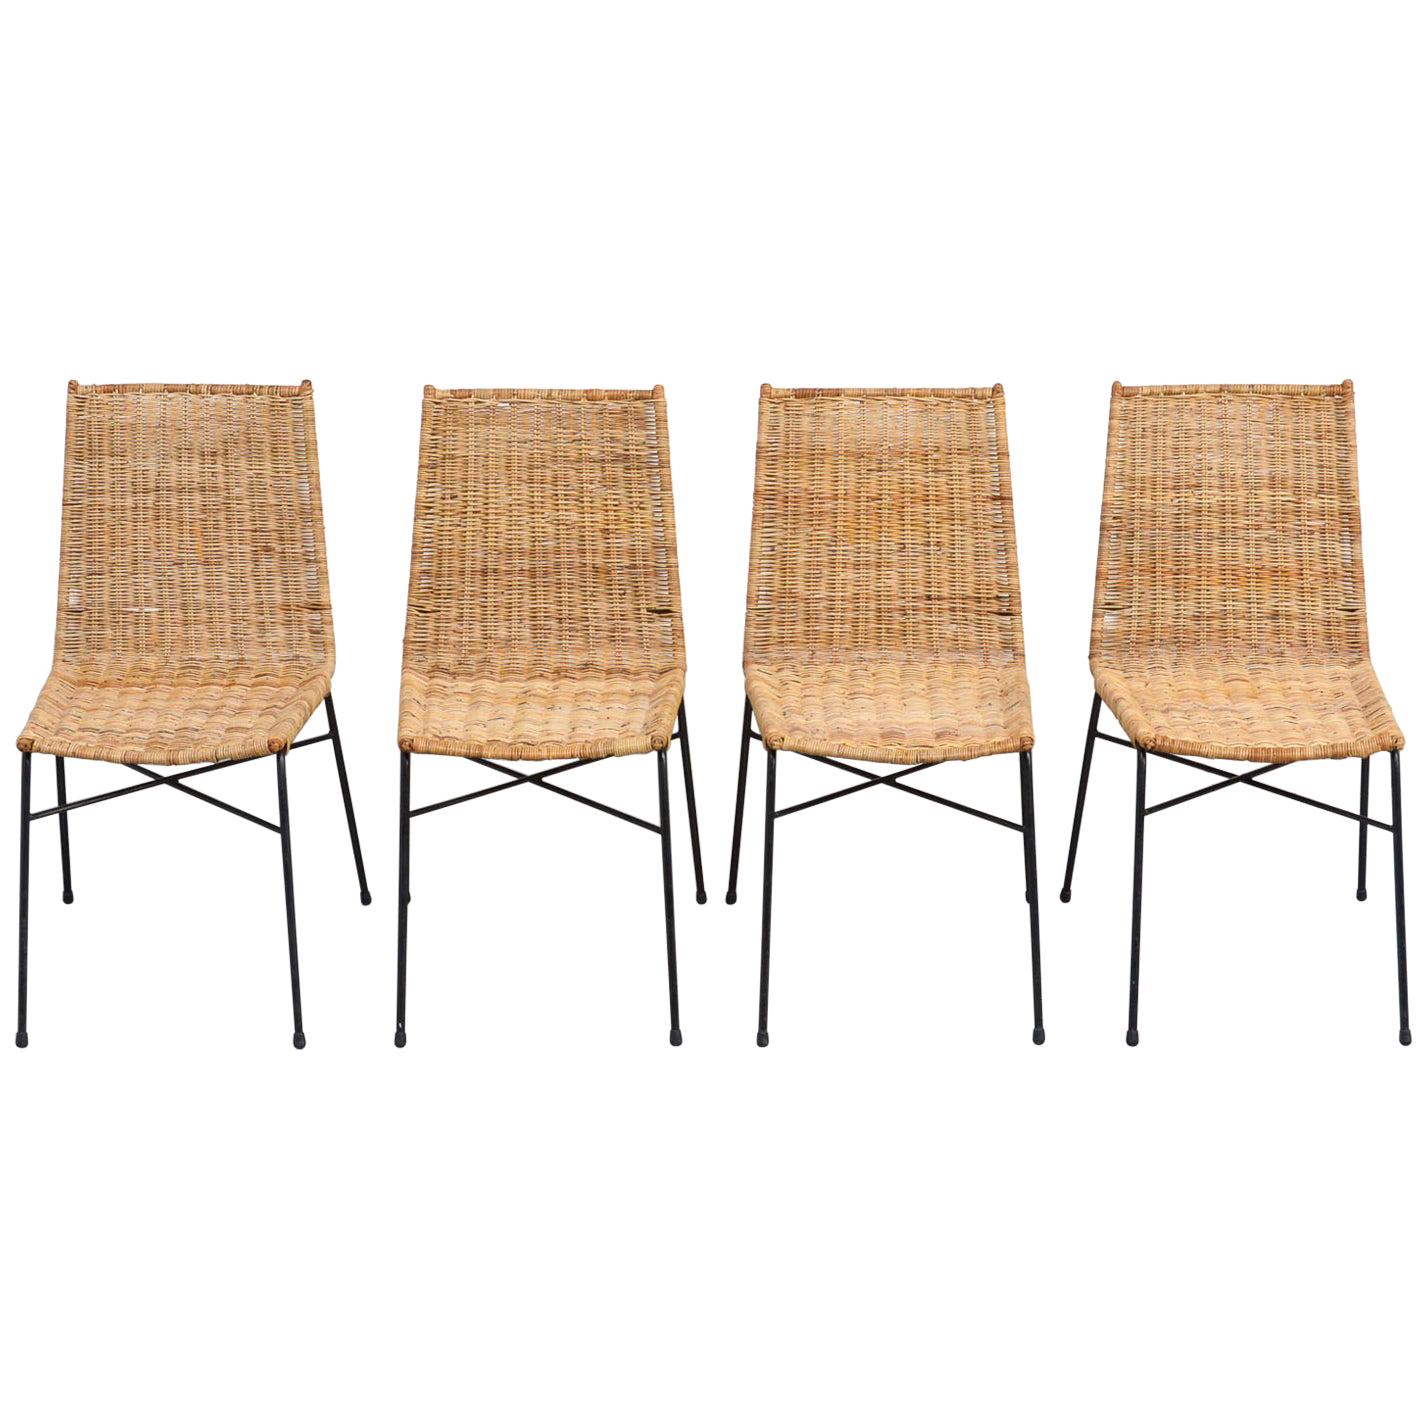 Set of 4 Italian Wicker Dining Chairs